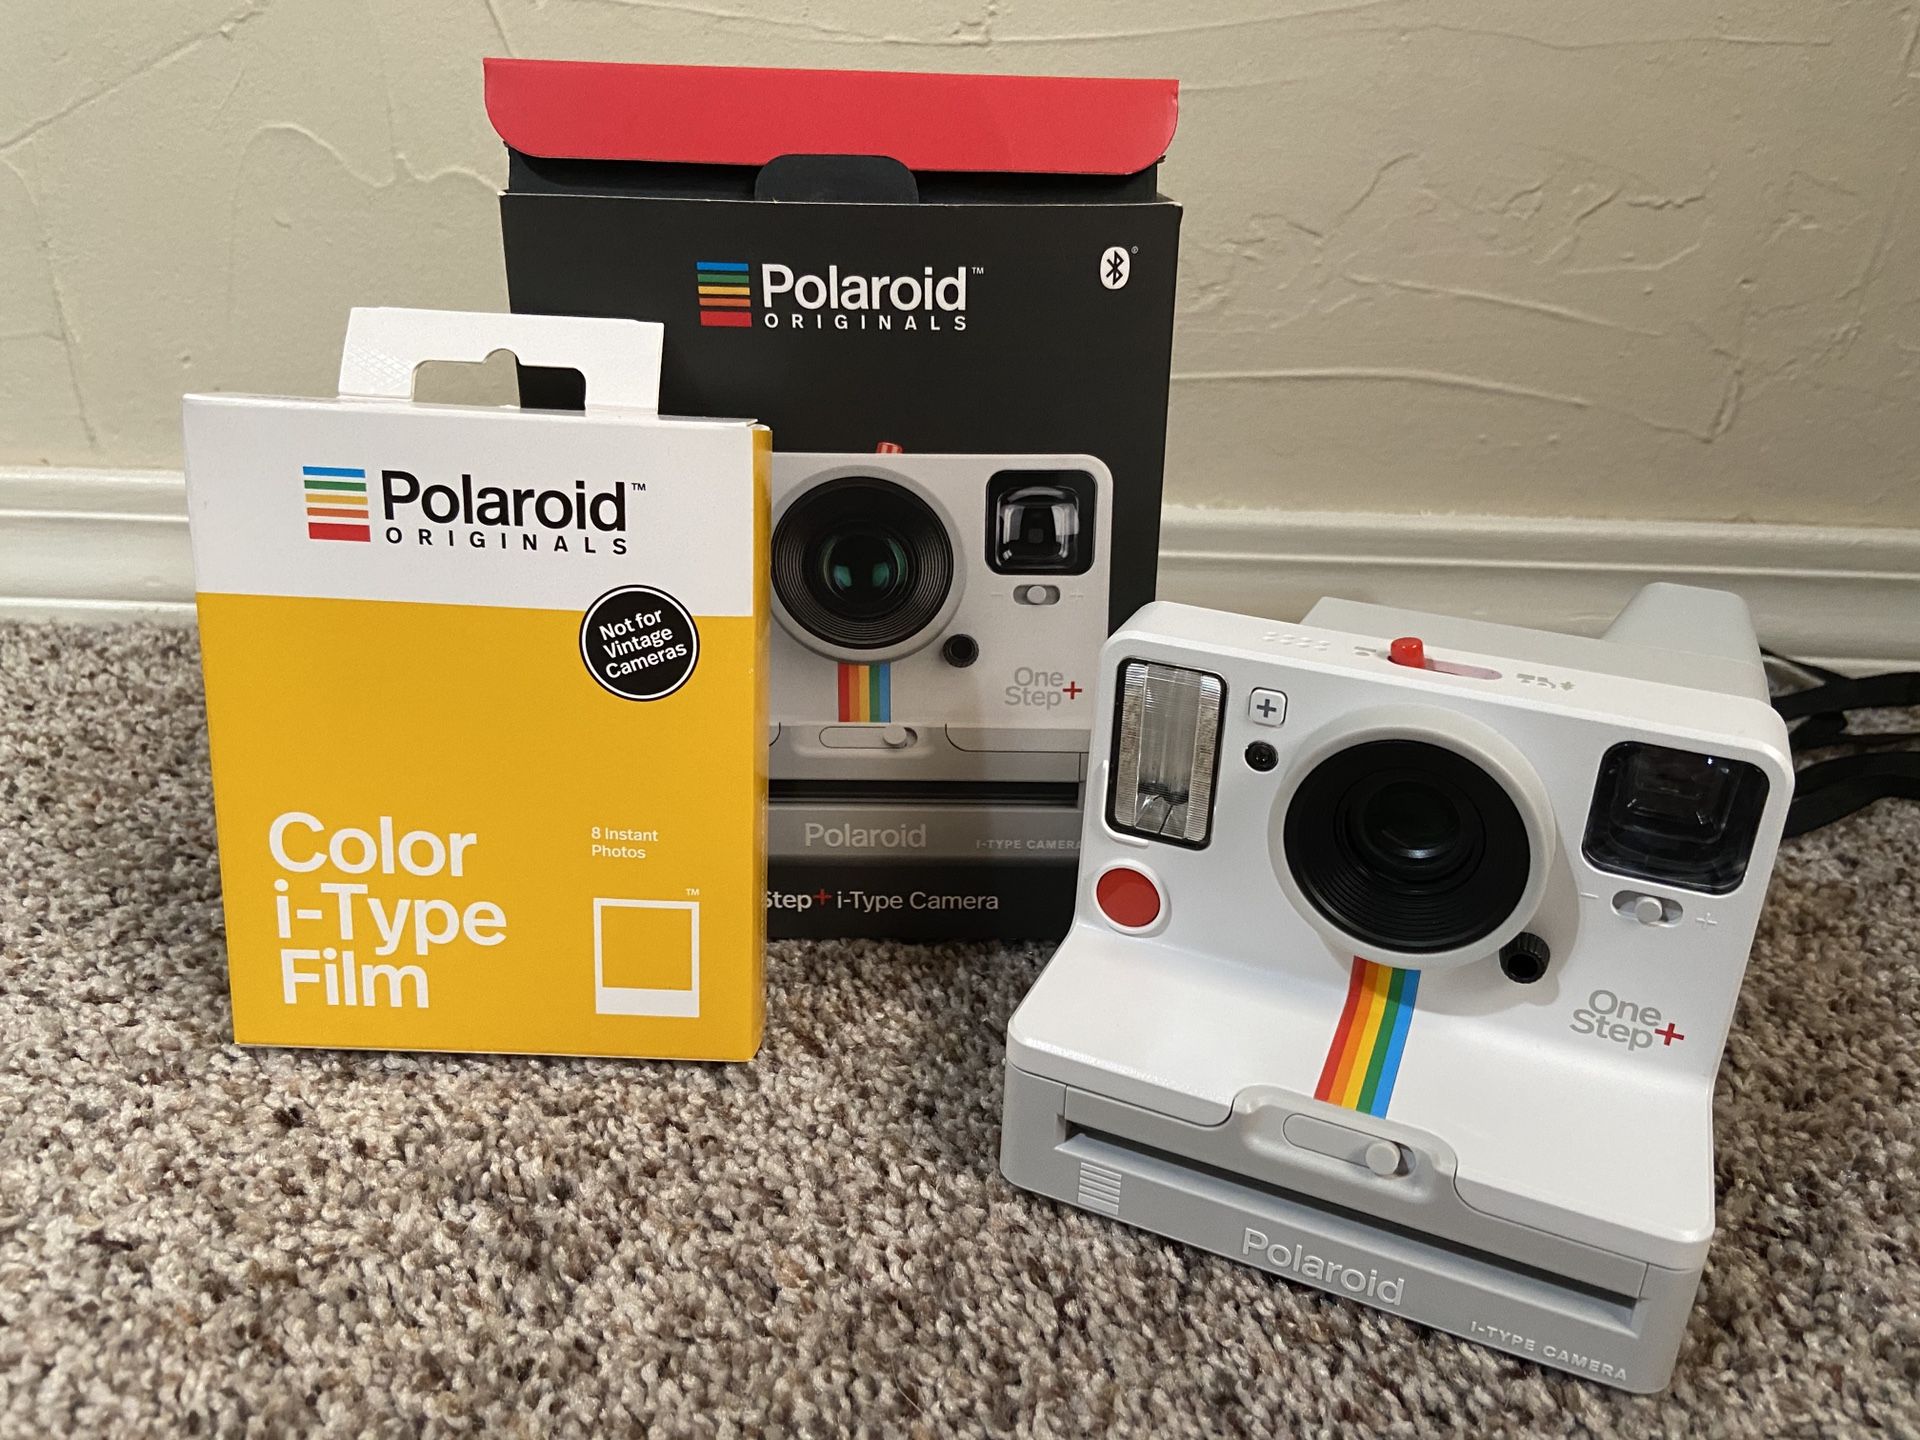 One Step+ Polaroid I-Type Camera